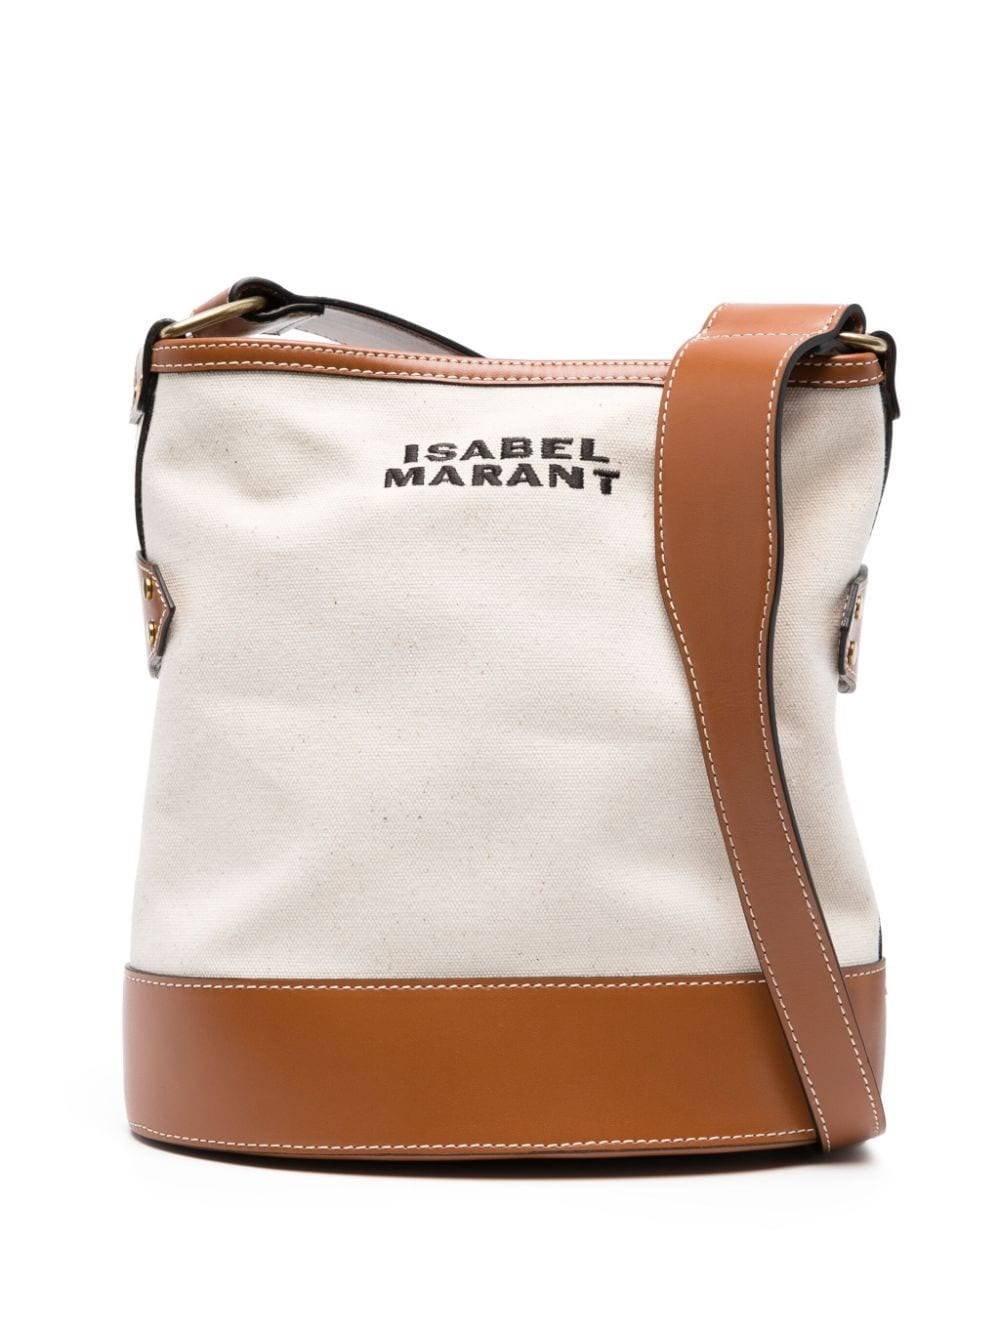 isabel marant Samara shoulder bag with embroidery available on   - 31911 - KI